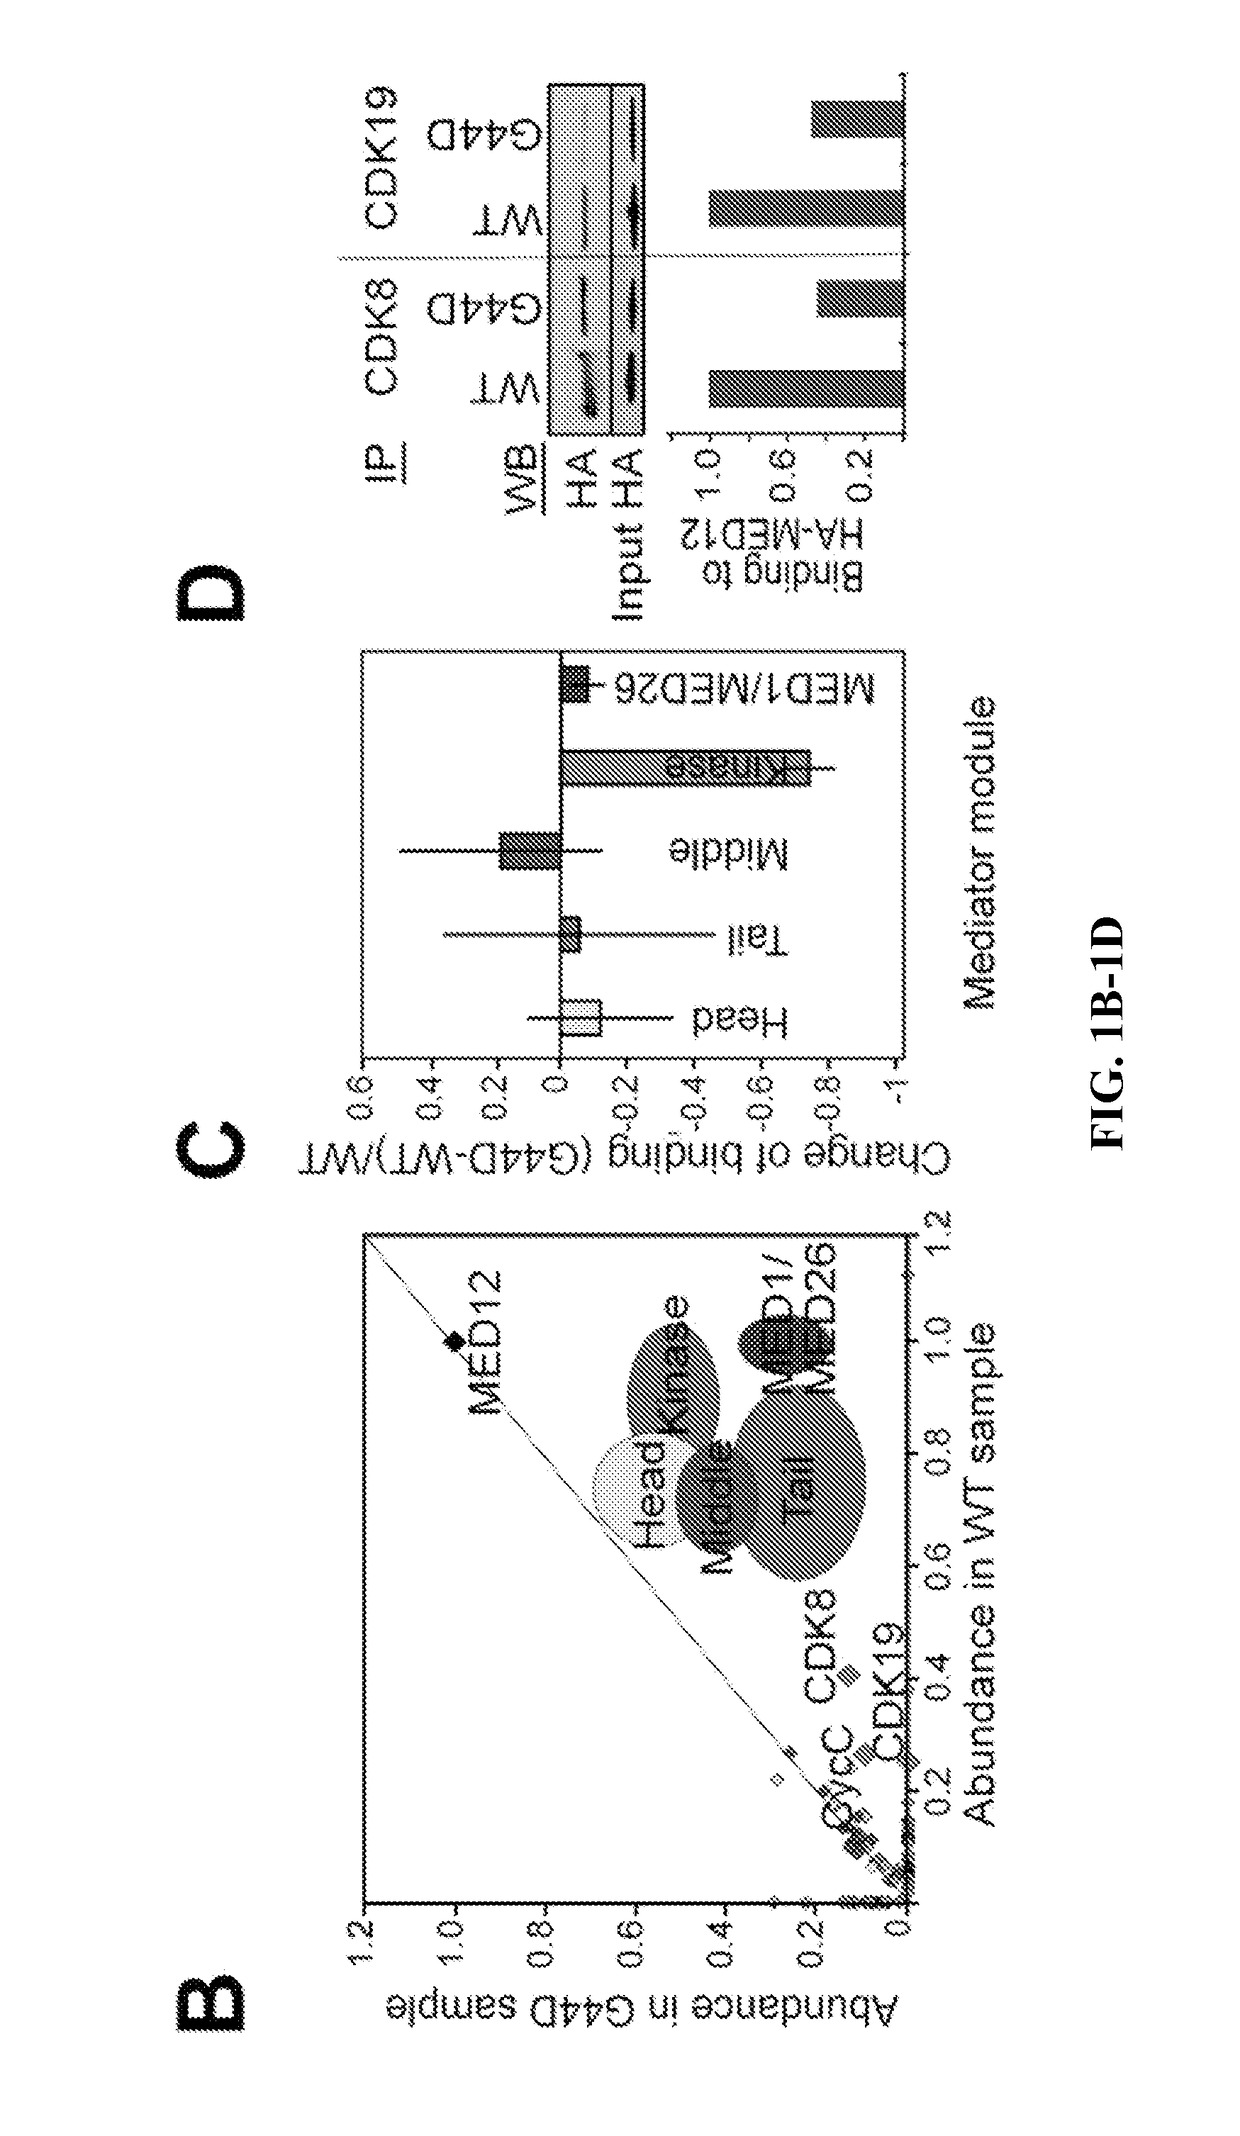 Novel peptide activator of cyclin c-dependent kinase 8 (CDK8)